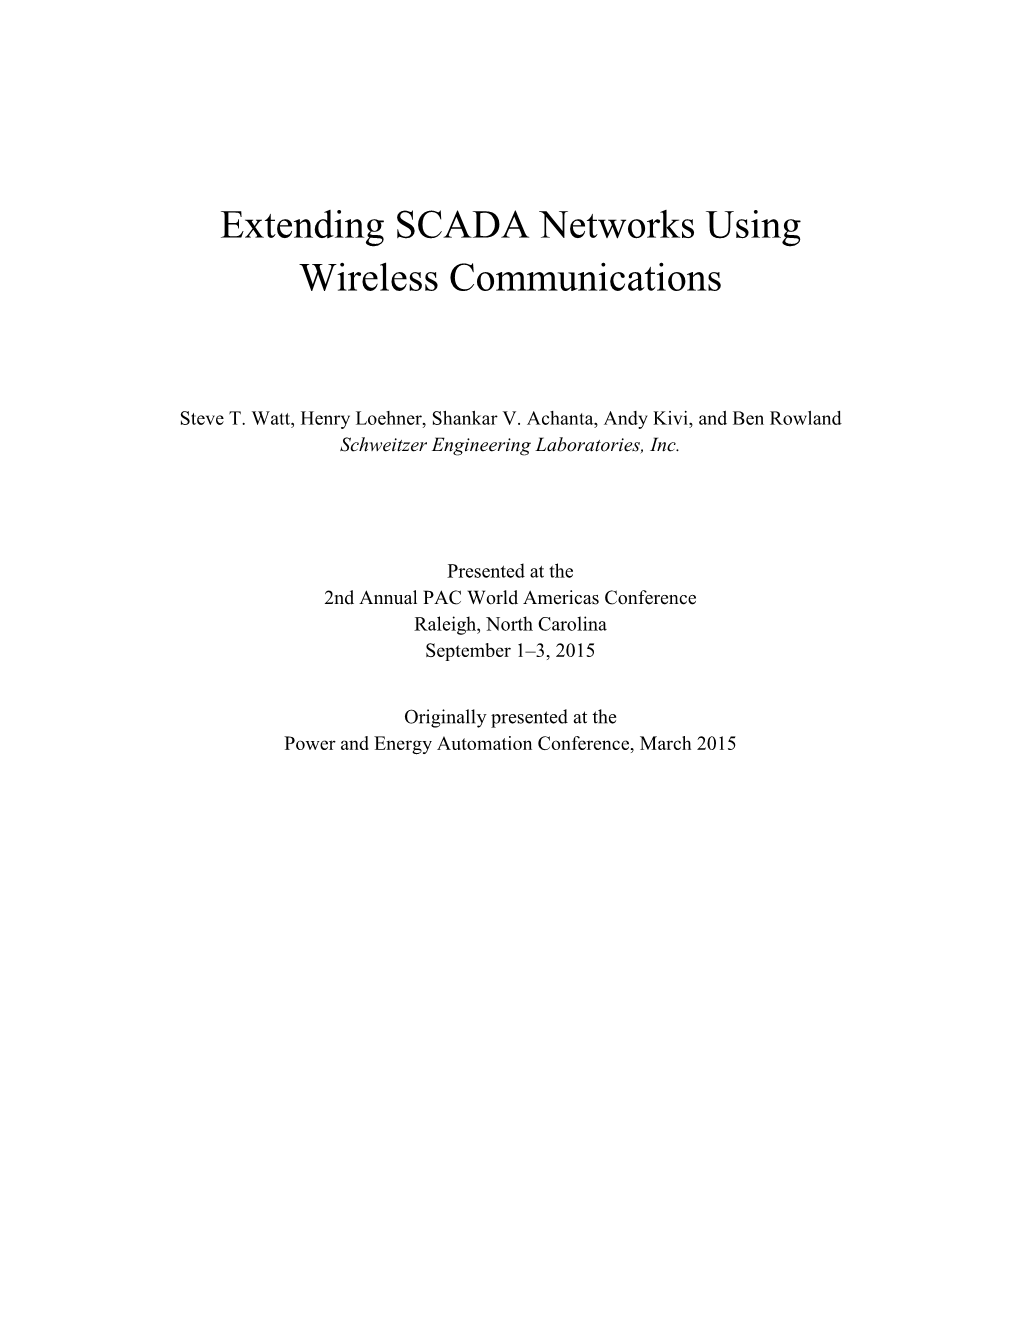 Extending SCADA Networks Using Wireless Communications